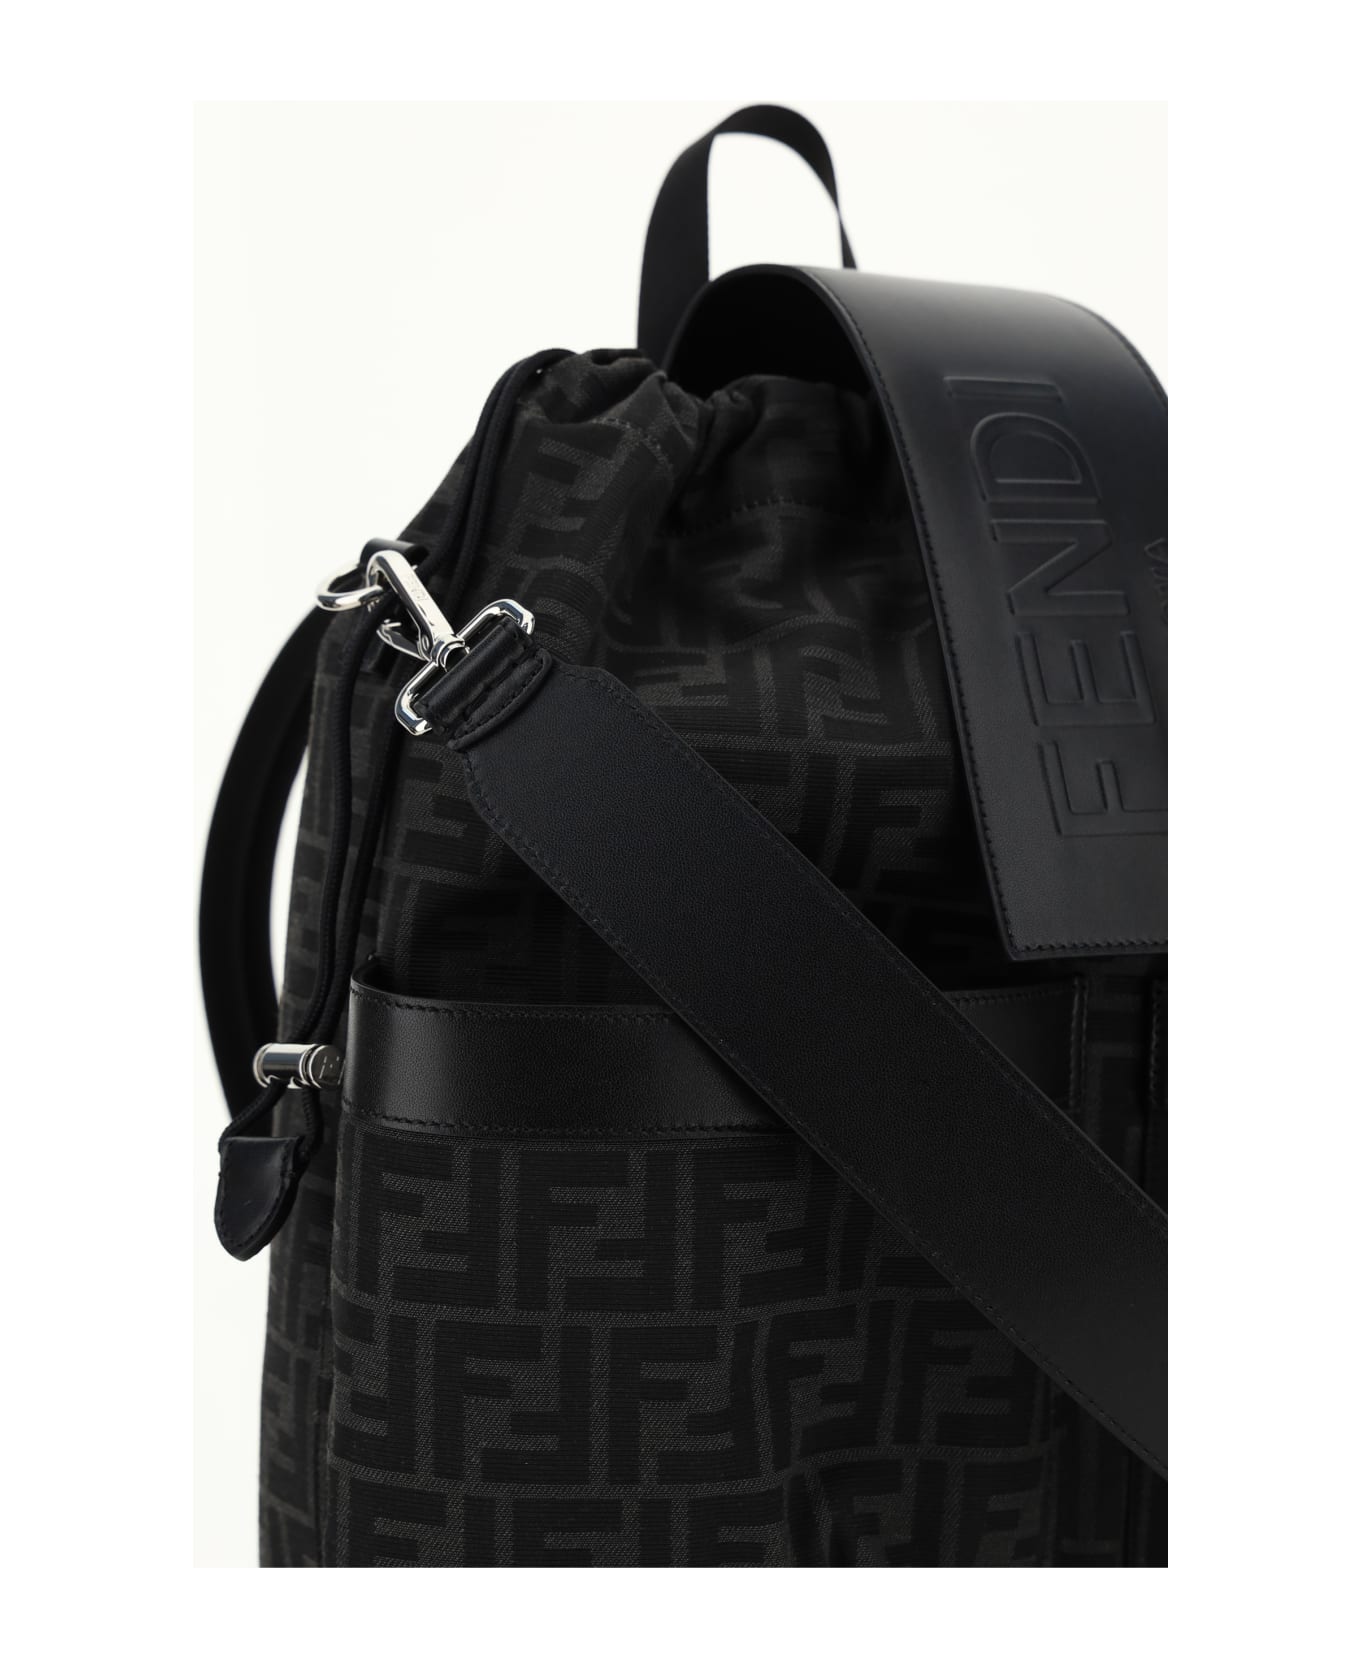 Fendi Backpack - Asfalto+nero+pallad.